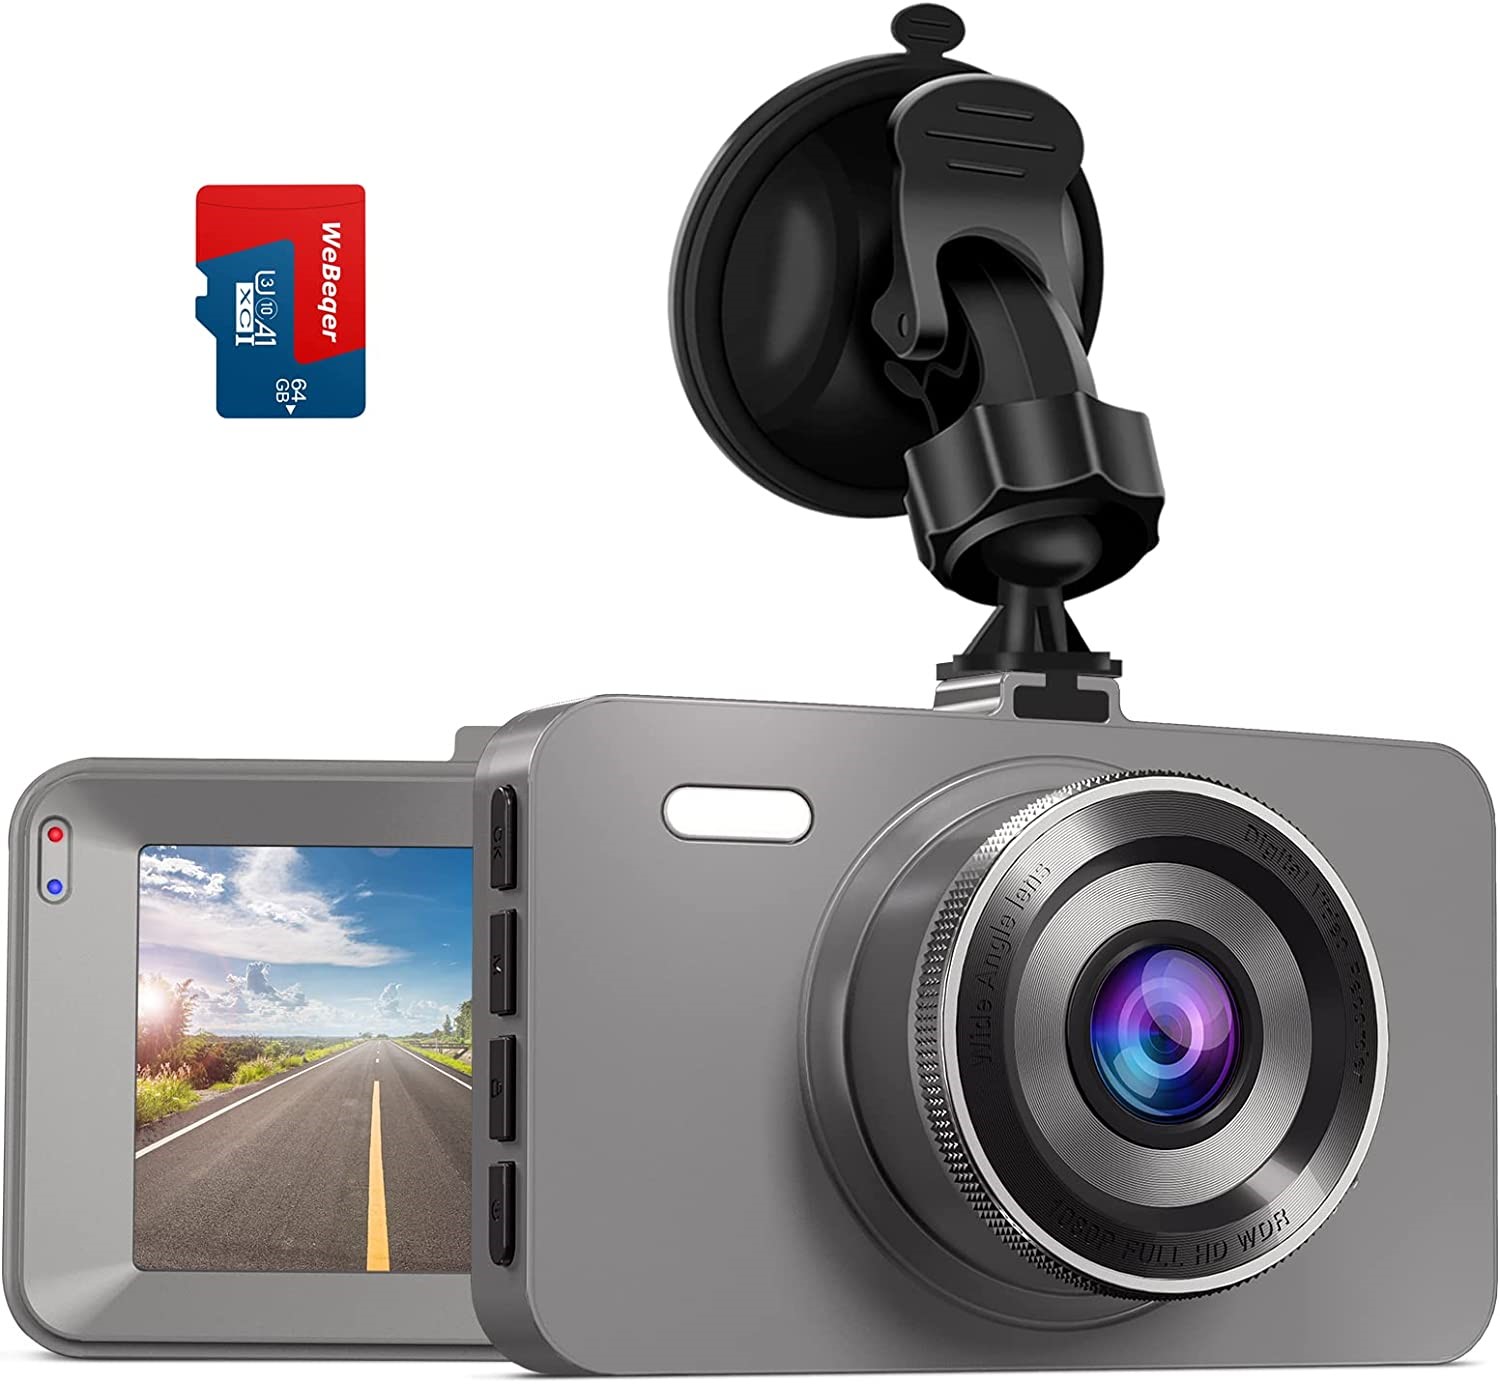 Dashcam / caméra embarquée tactile pour voiture - preuve vidéo en, camera  dashcam